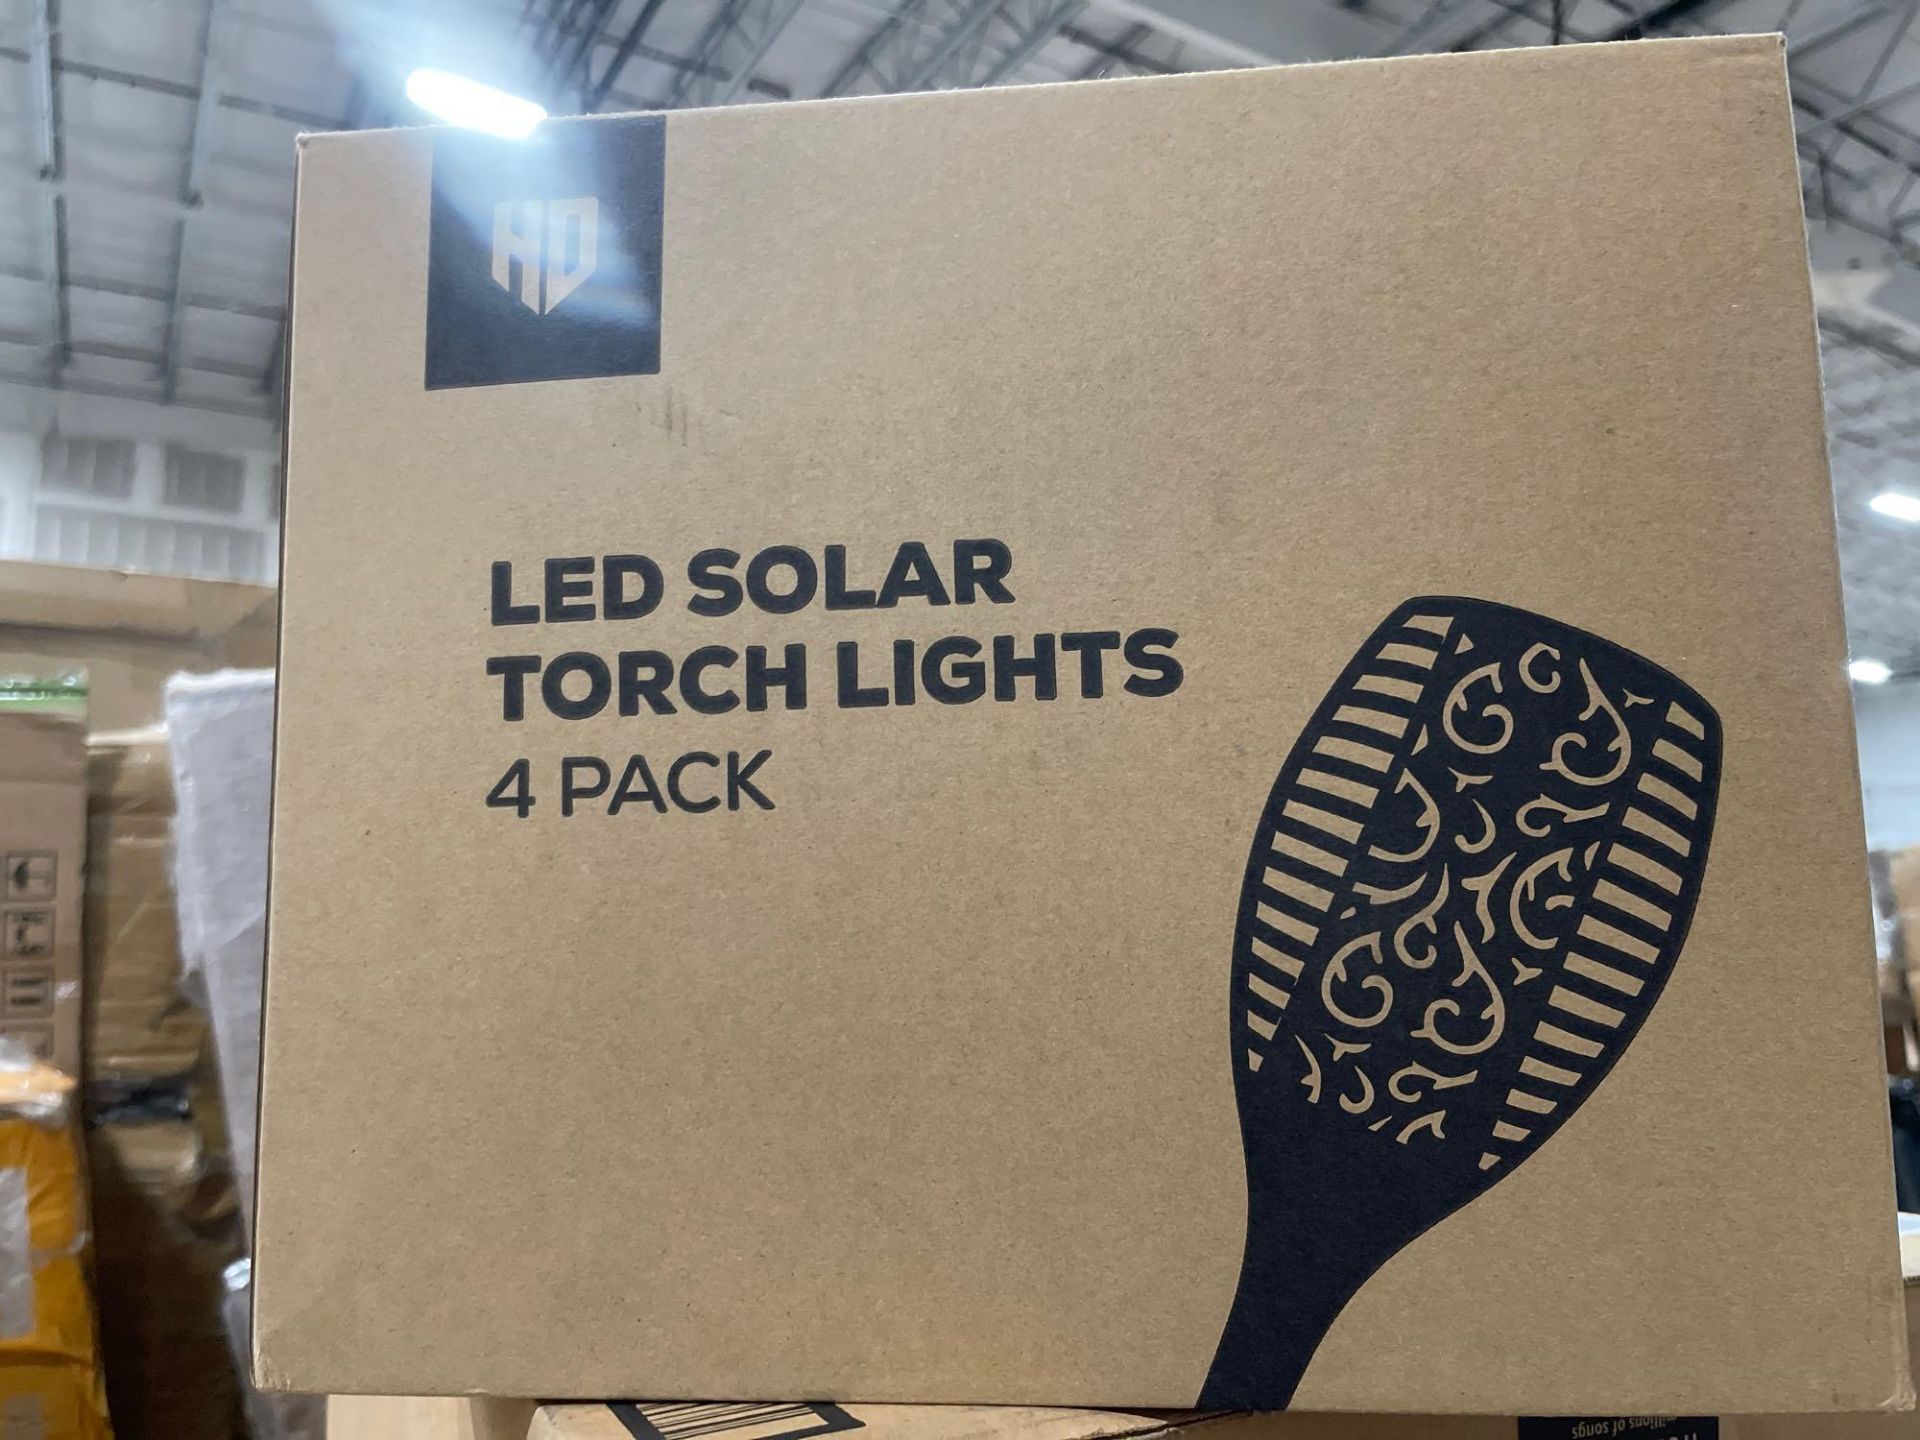 LED Solar Torch Lights - Image 2 of 3